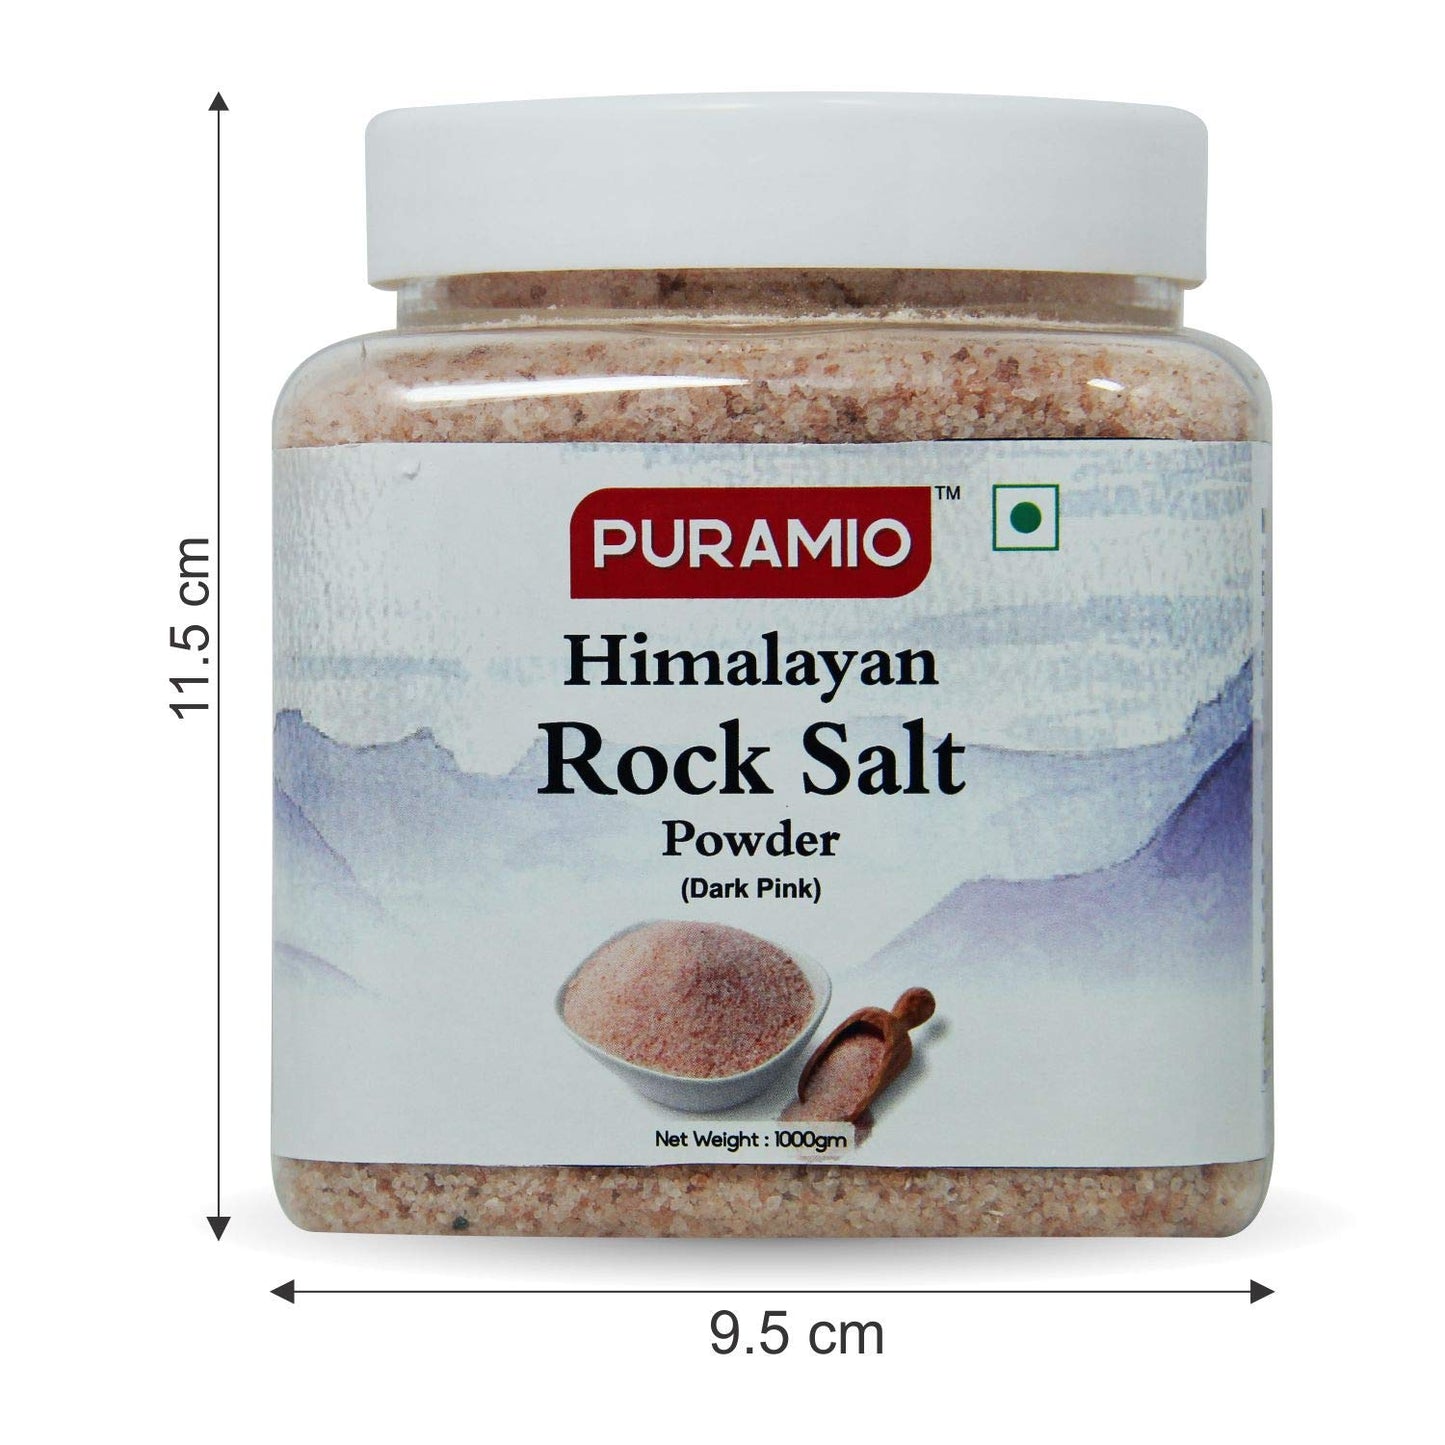 Puramio Himalayan Pink Rock Salt Powder - Dark, 1Kg